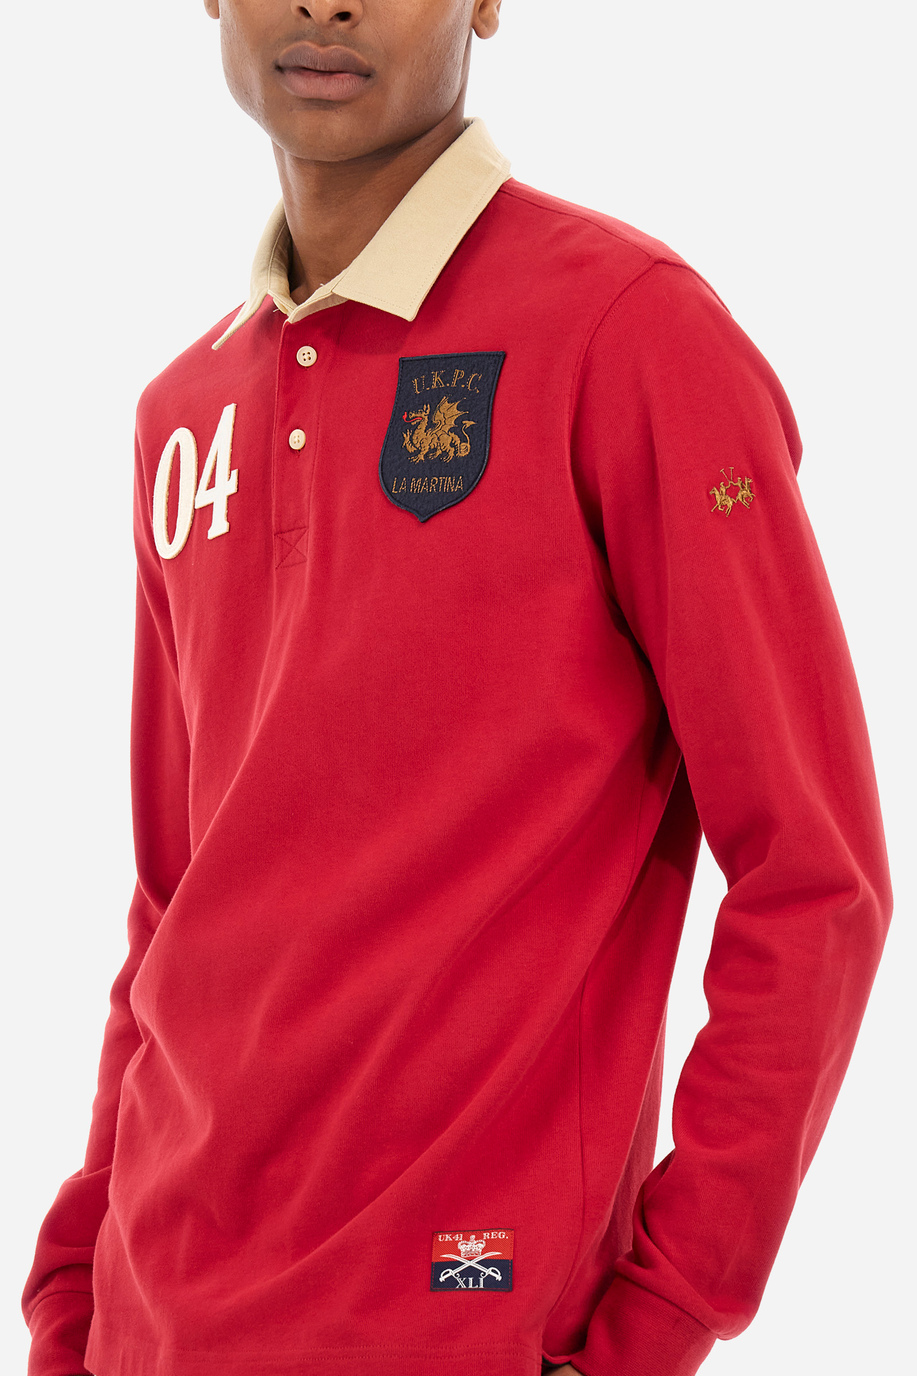 Herren -Poloshirt regular fit - Waldemar - Guards - England | La Martina - Official Online Shop